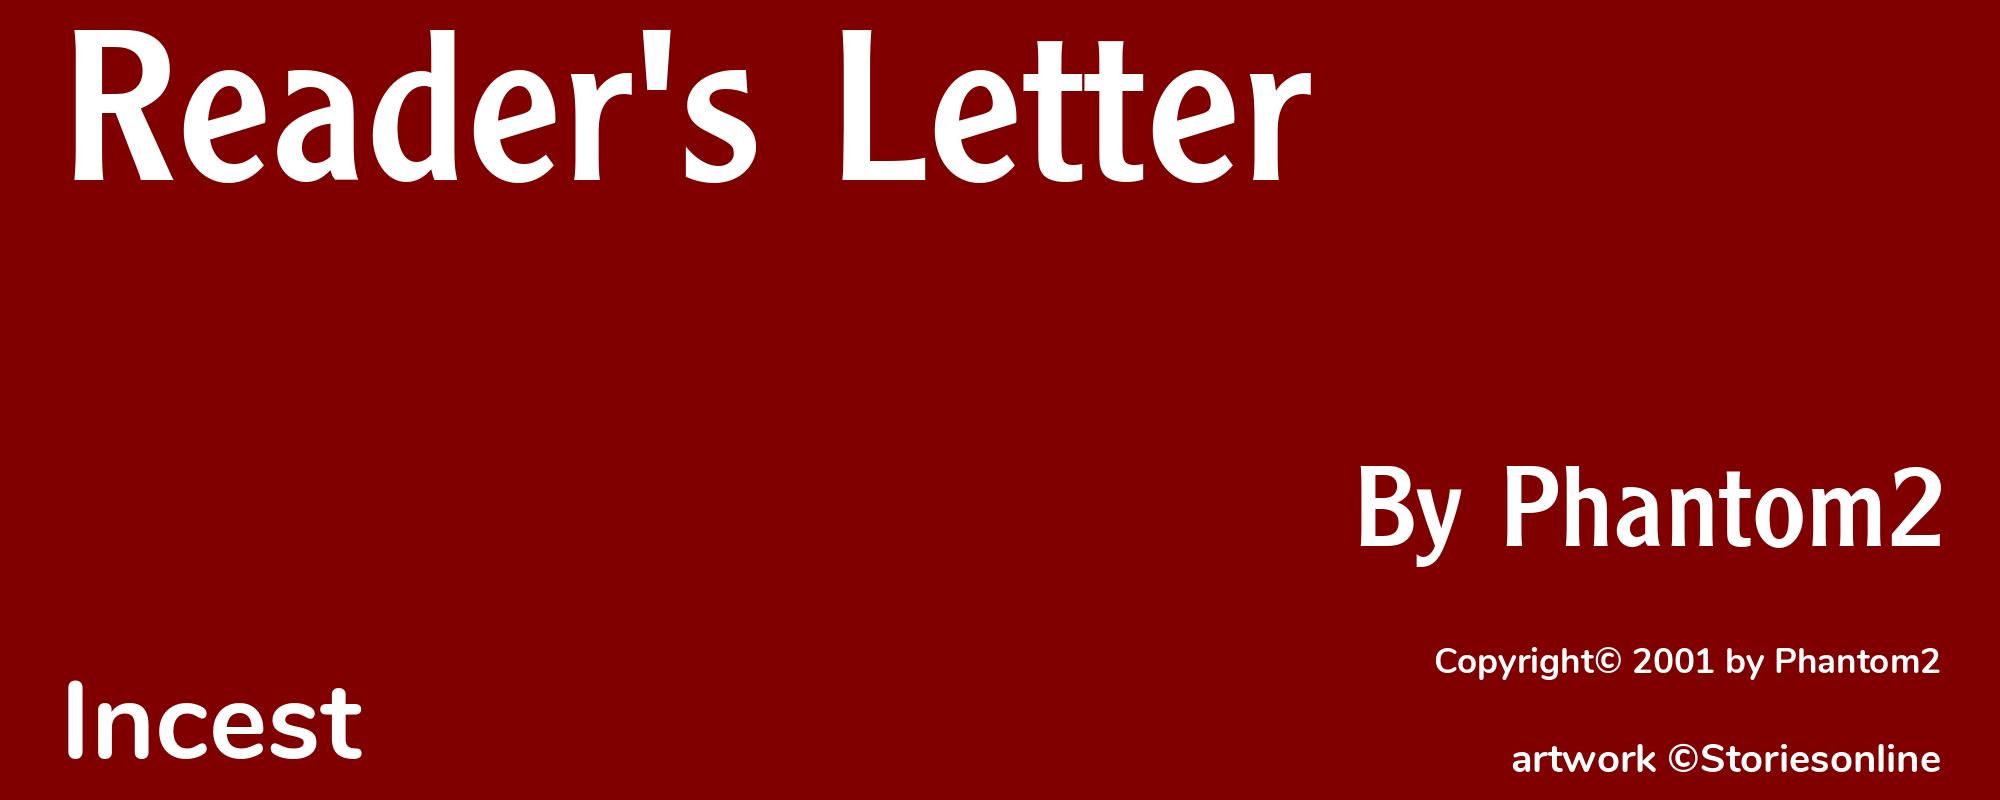 Reader's Letter - Cover